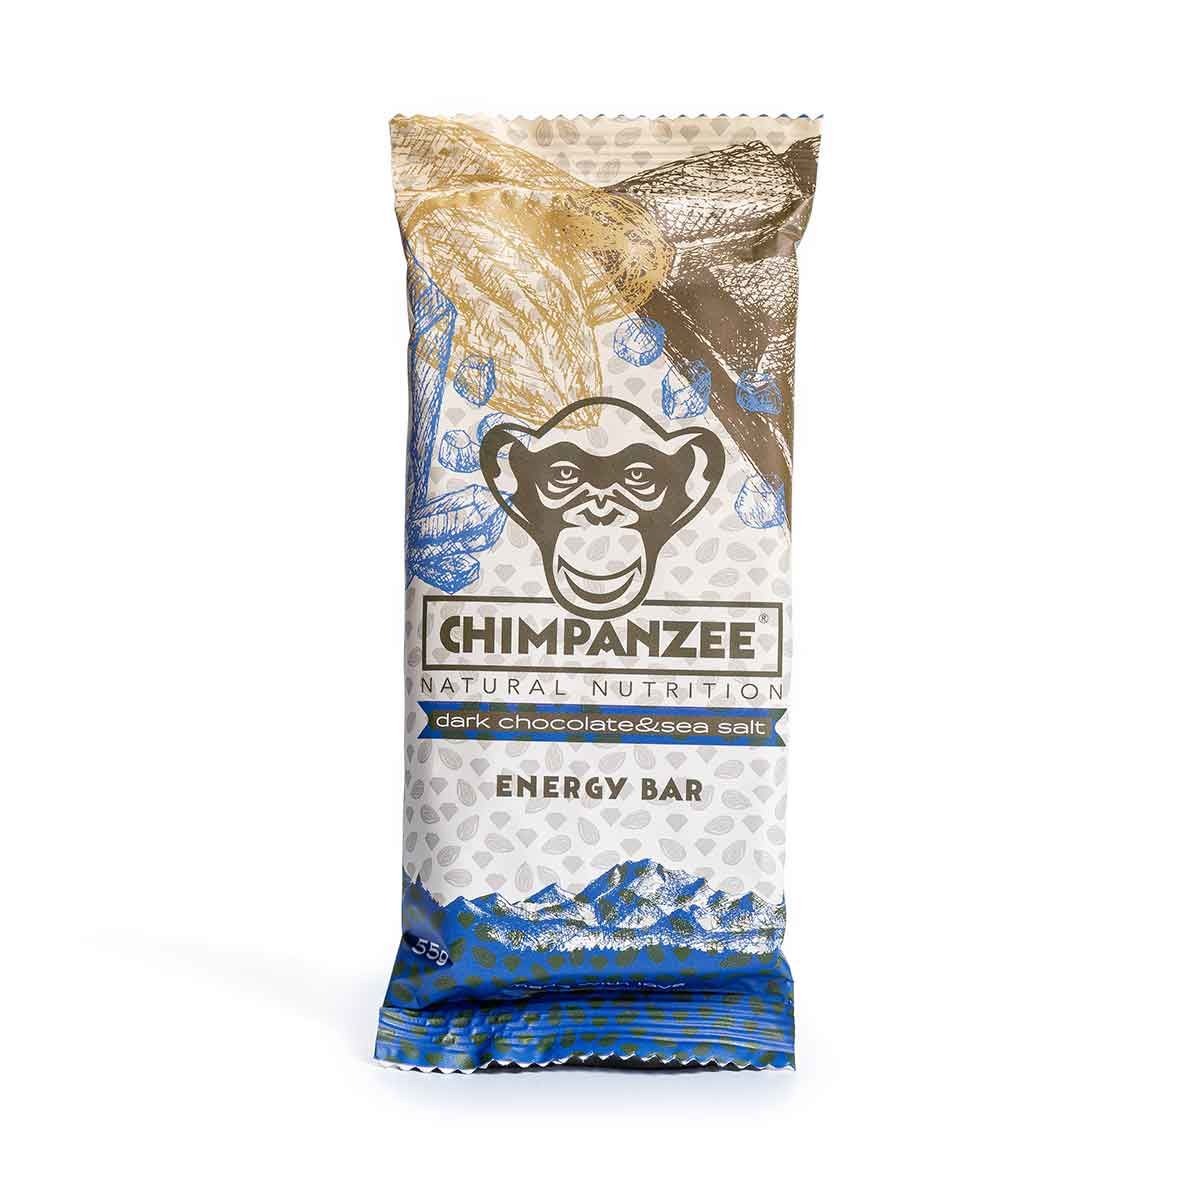 Chimpanzee energy bar - Dark chocolate, sea salt